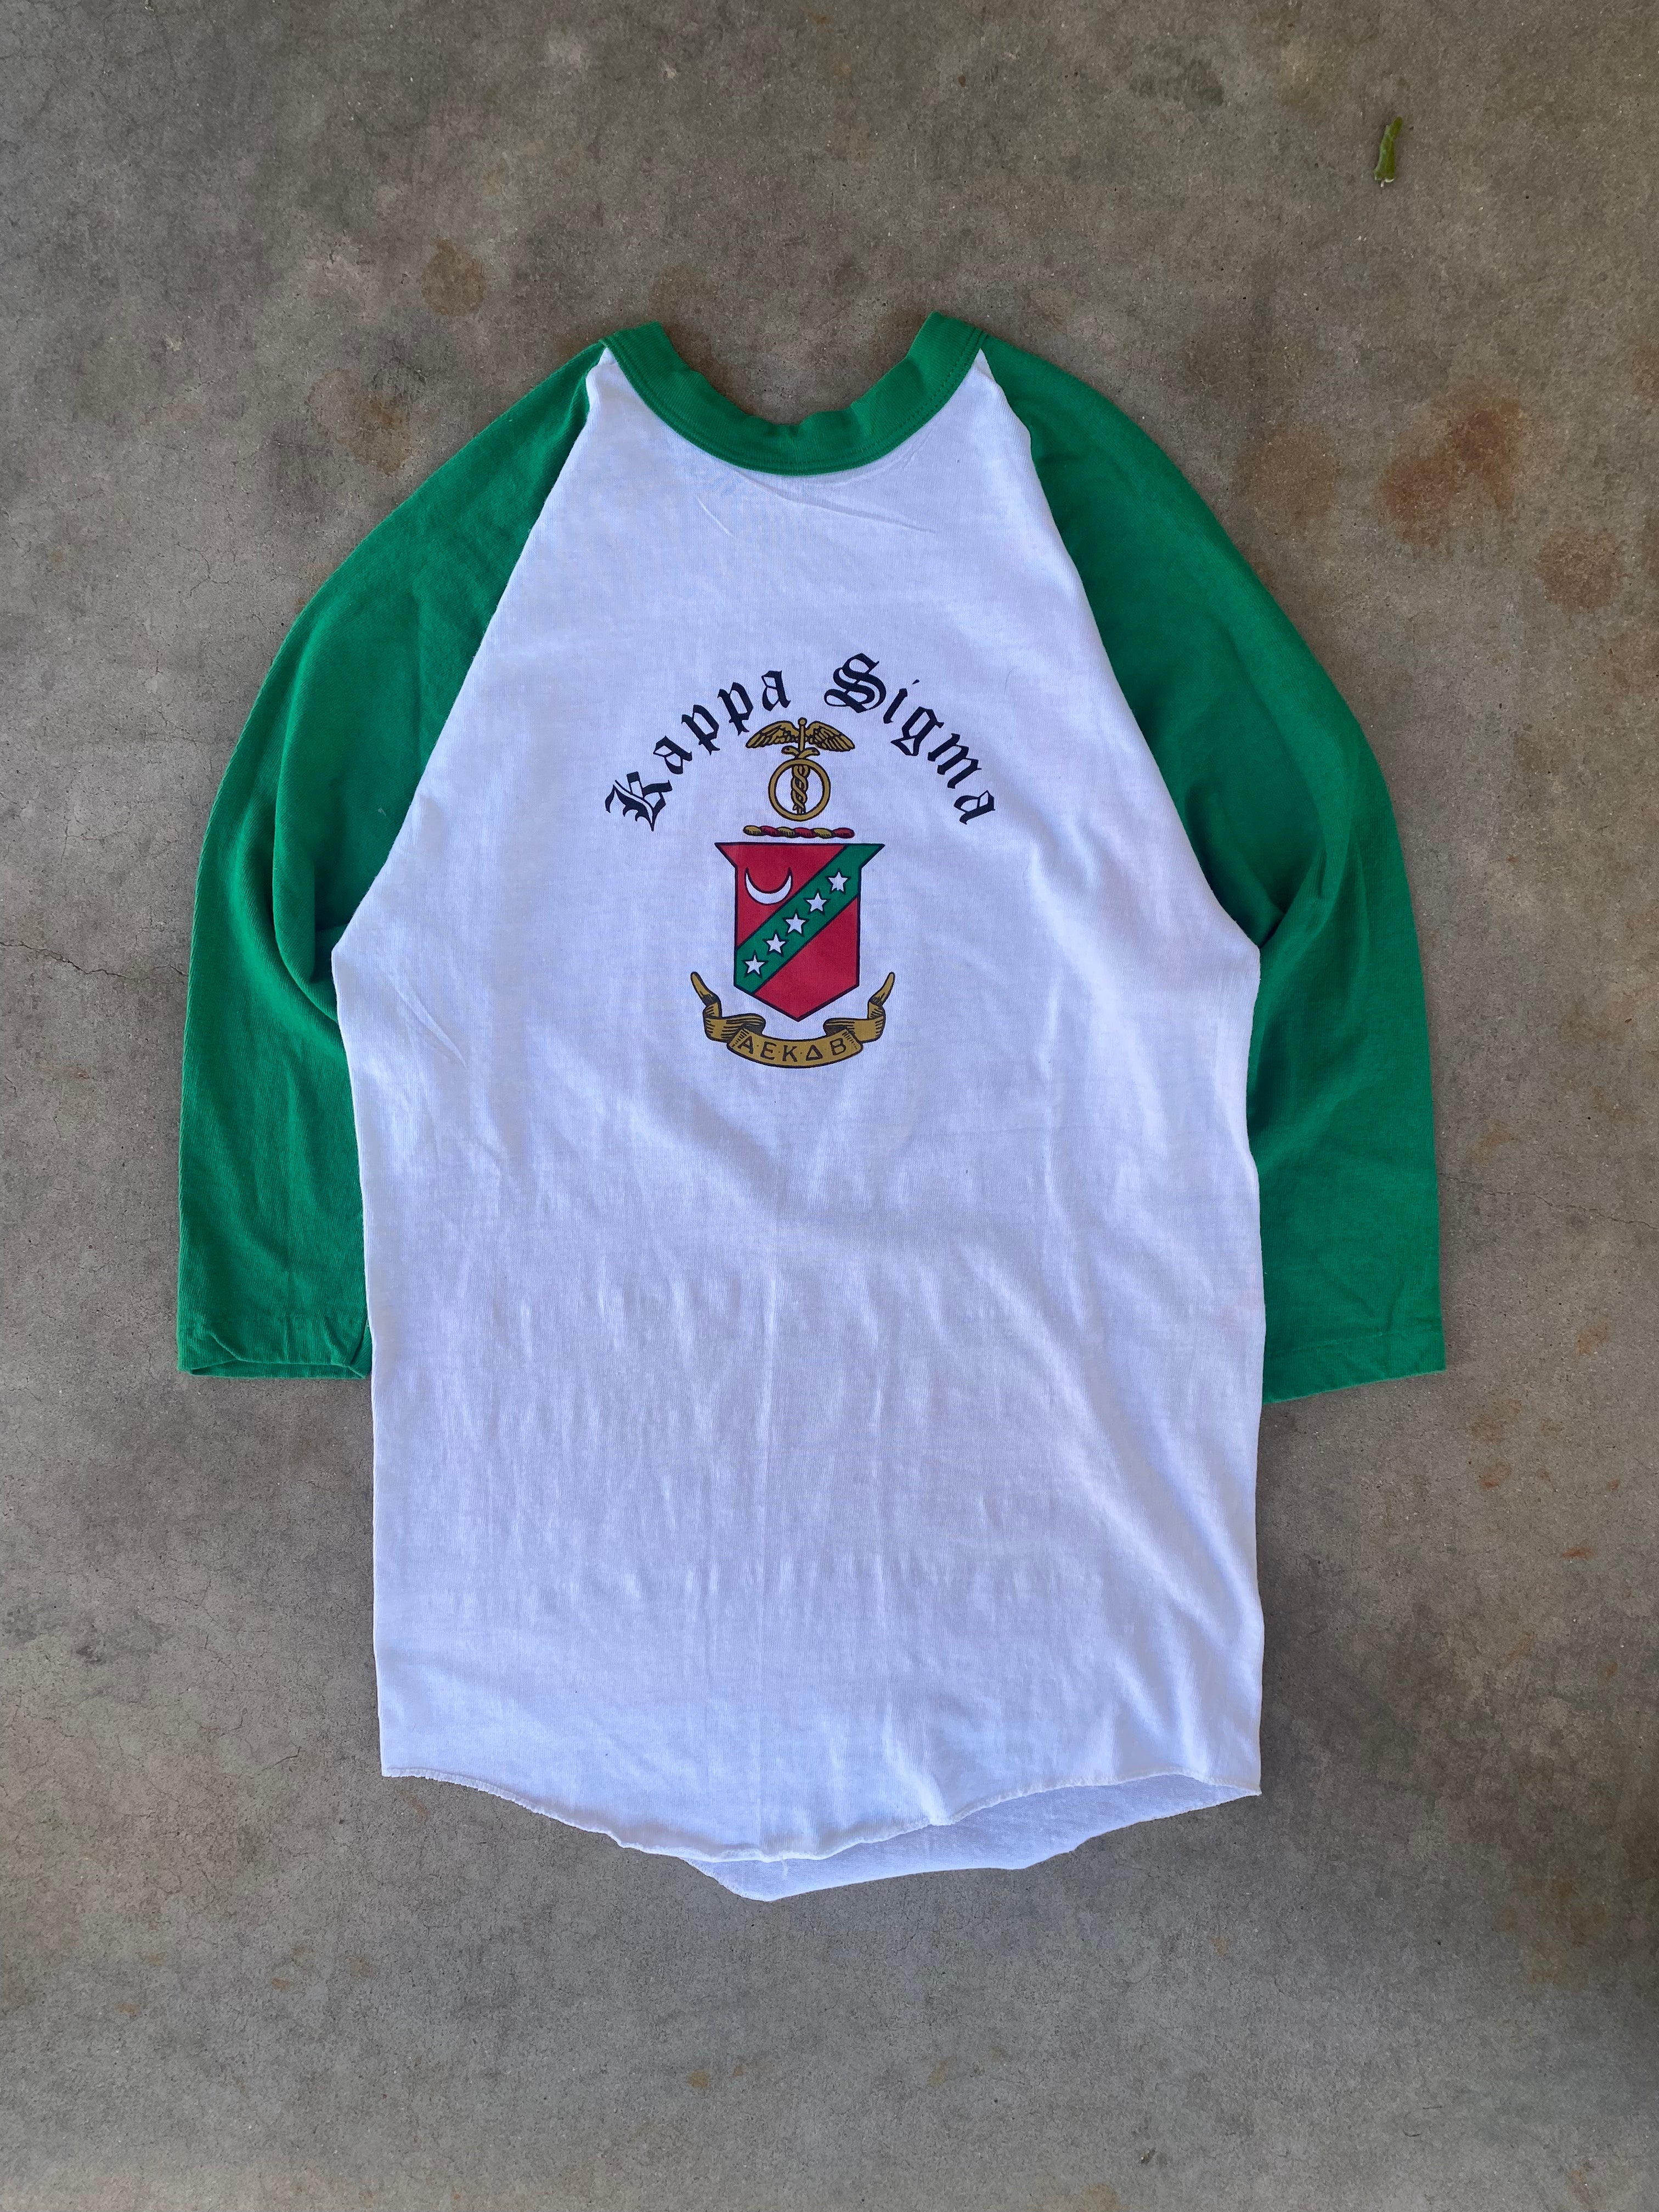 1970s Kappa Sigma Raglan T-Shirt (S)